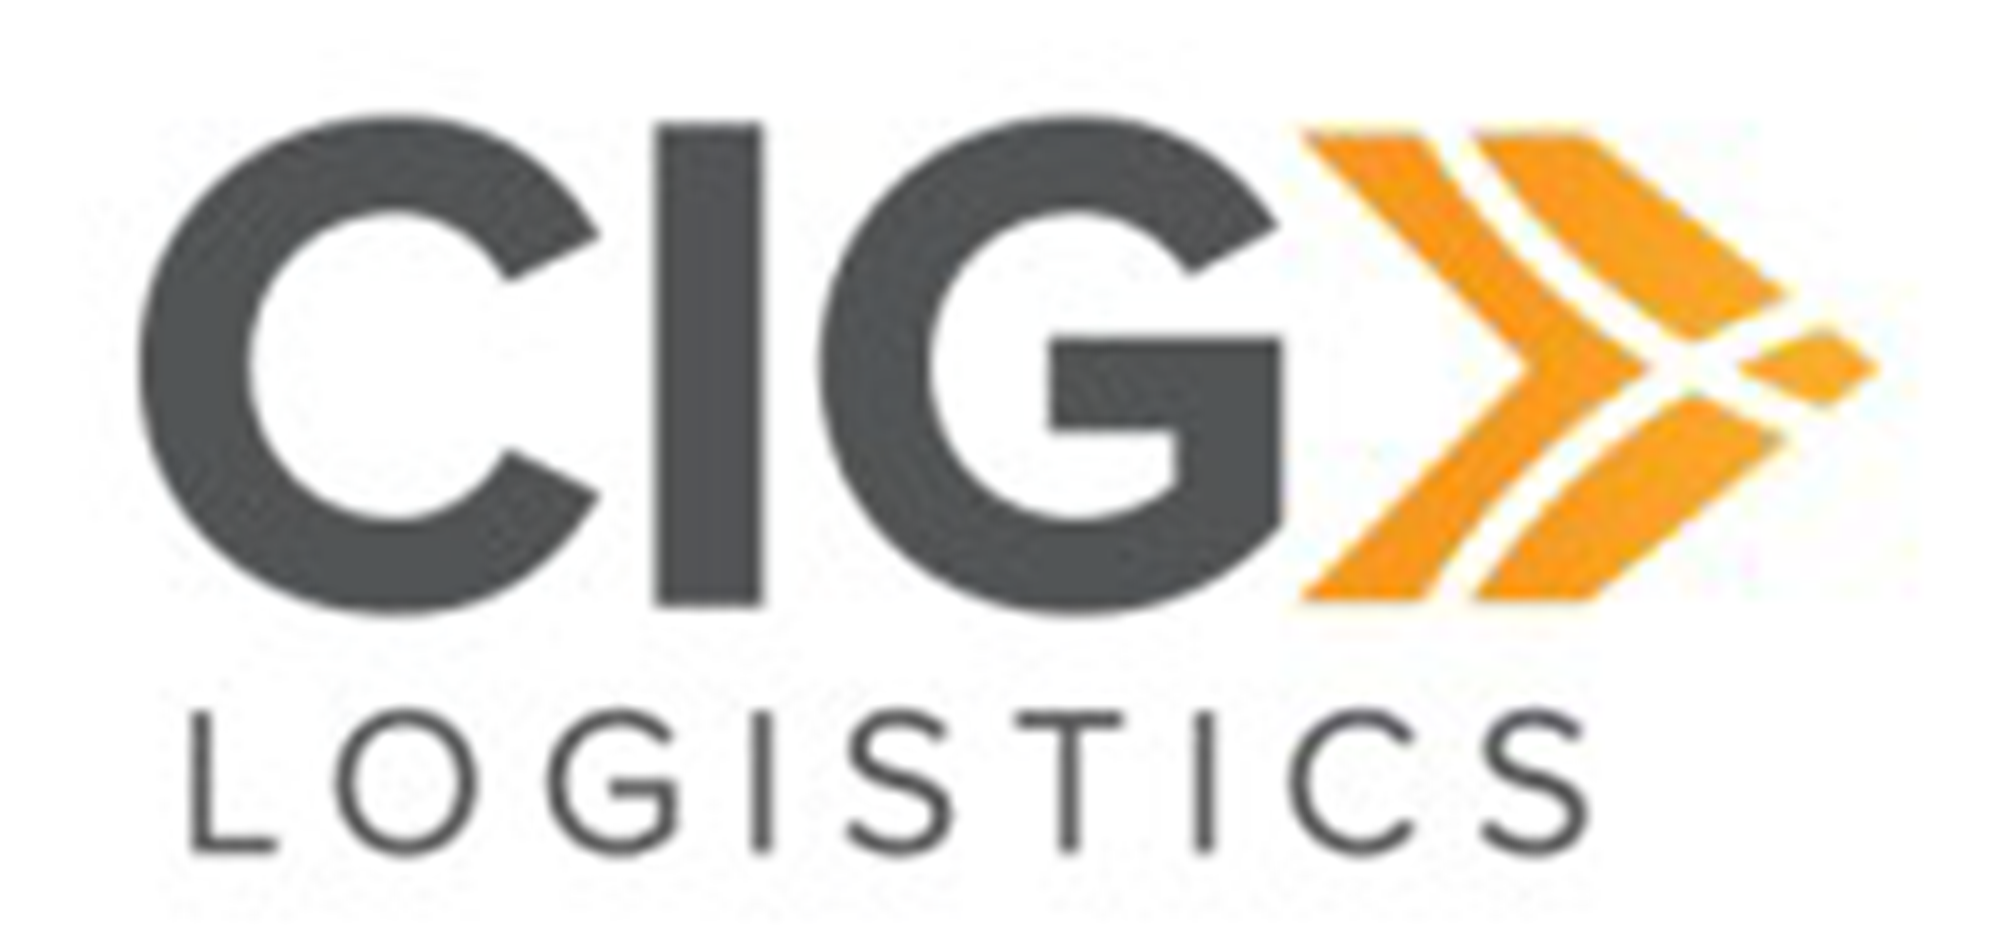 CIG Logistics (2)